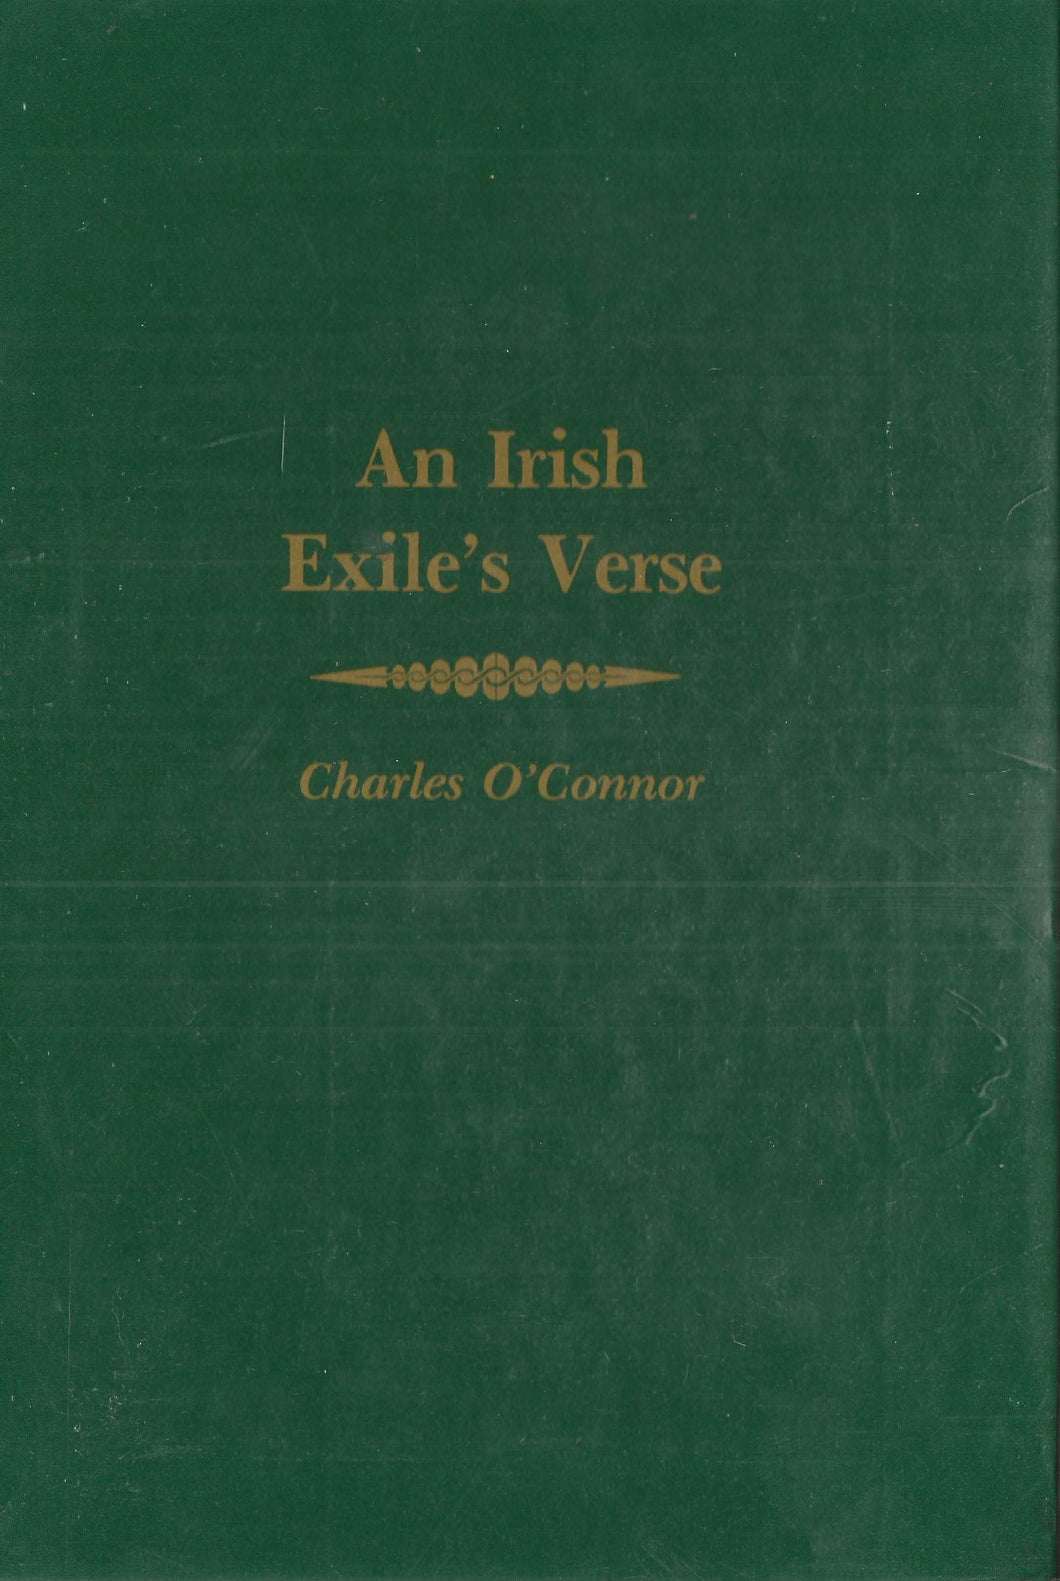 An Irish Exile's Verse